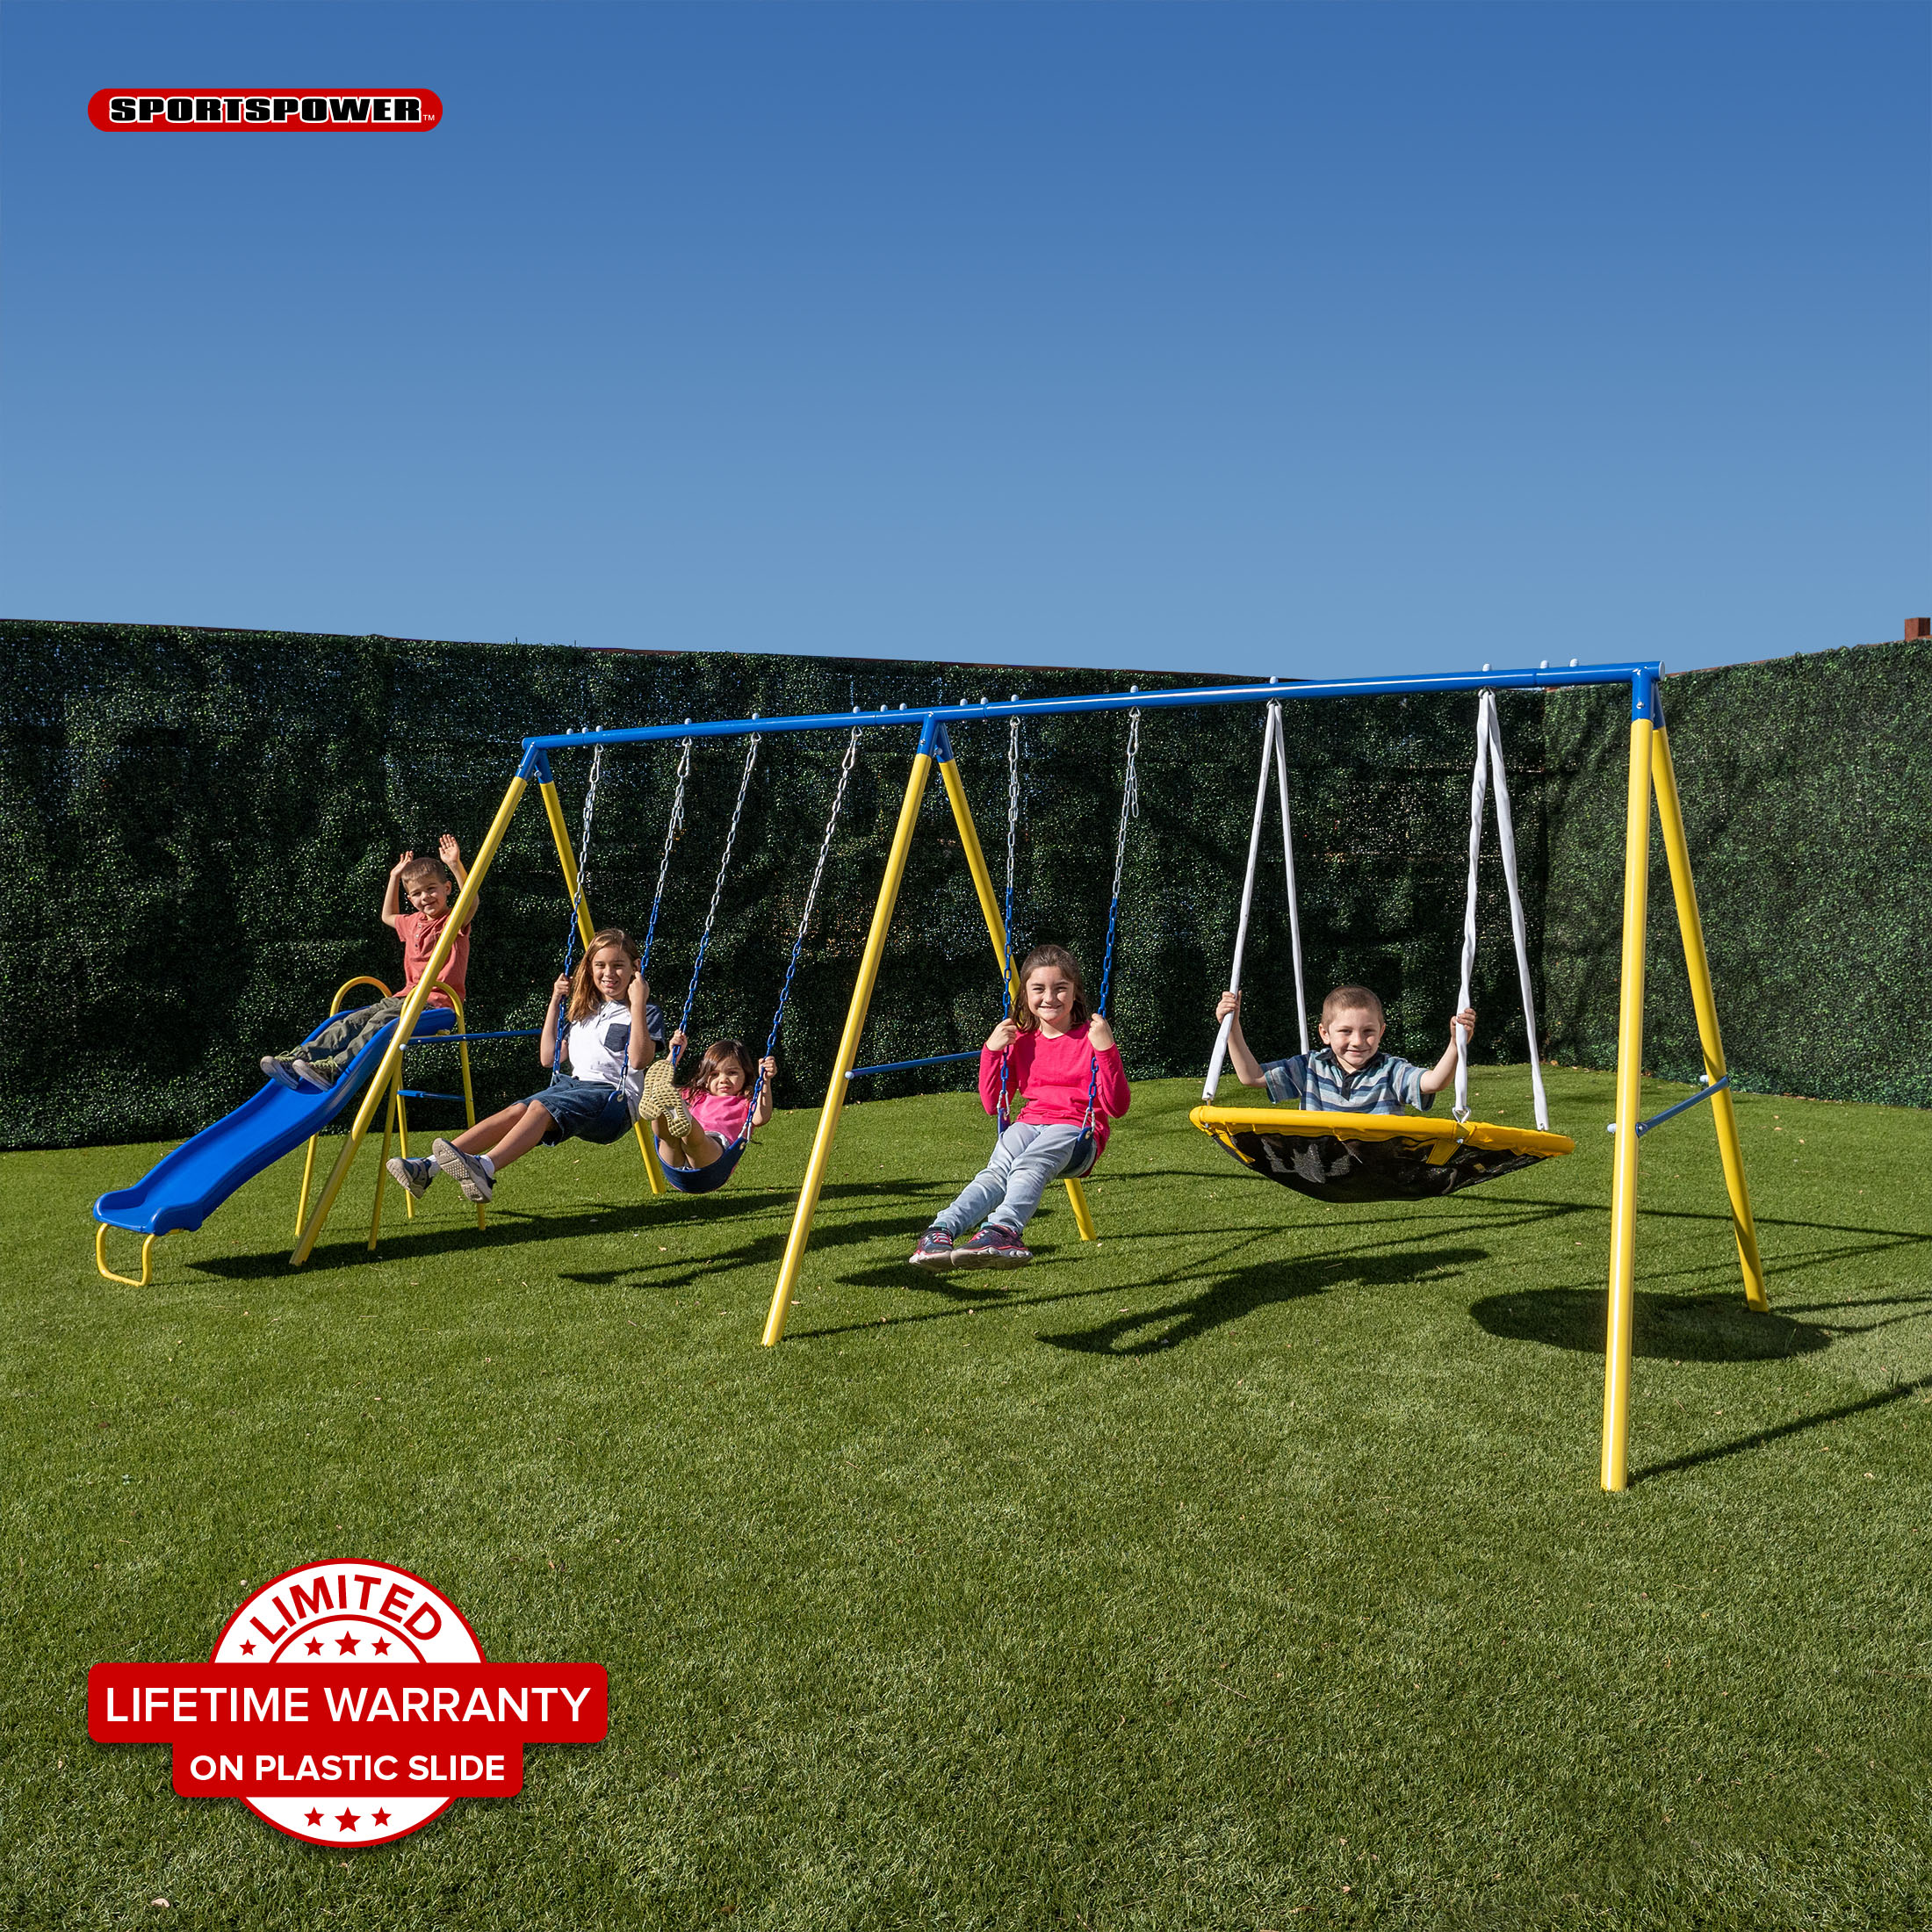 Sportspower Triple Swing & Saucer Metal Swing Set with Saucer Swing, 3 Adjustable Swings, & 5' Double Wall Slide with Lifetime Warranty - image 1 of 9